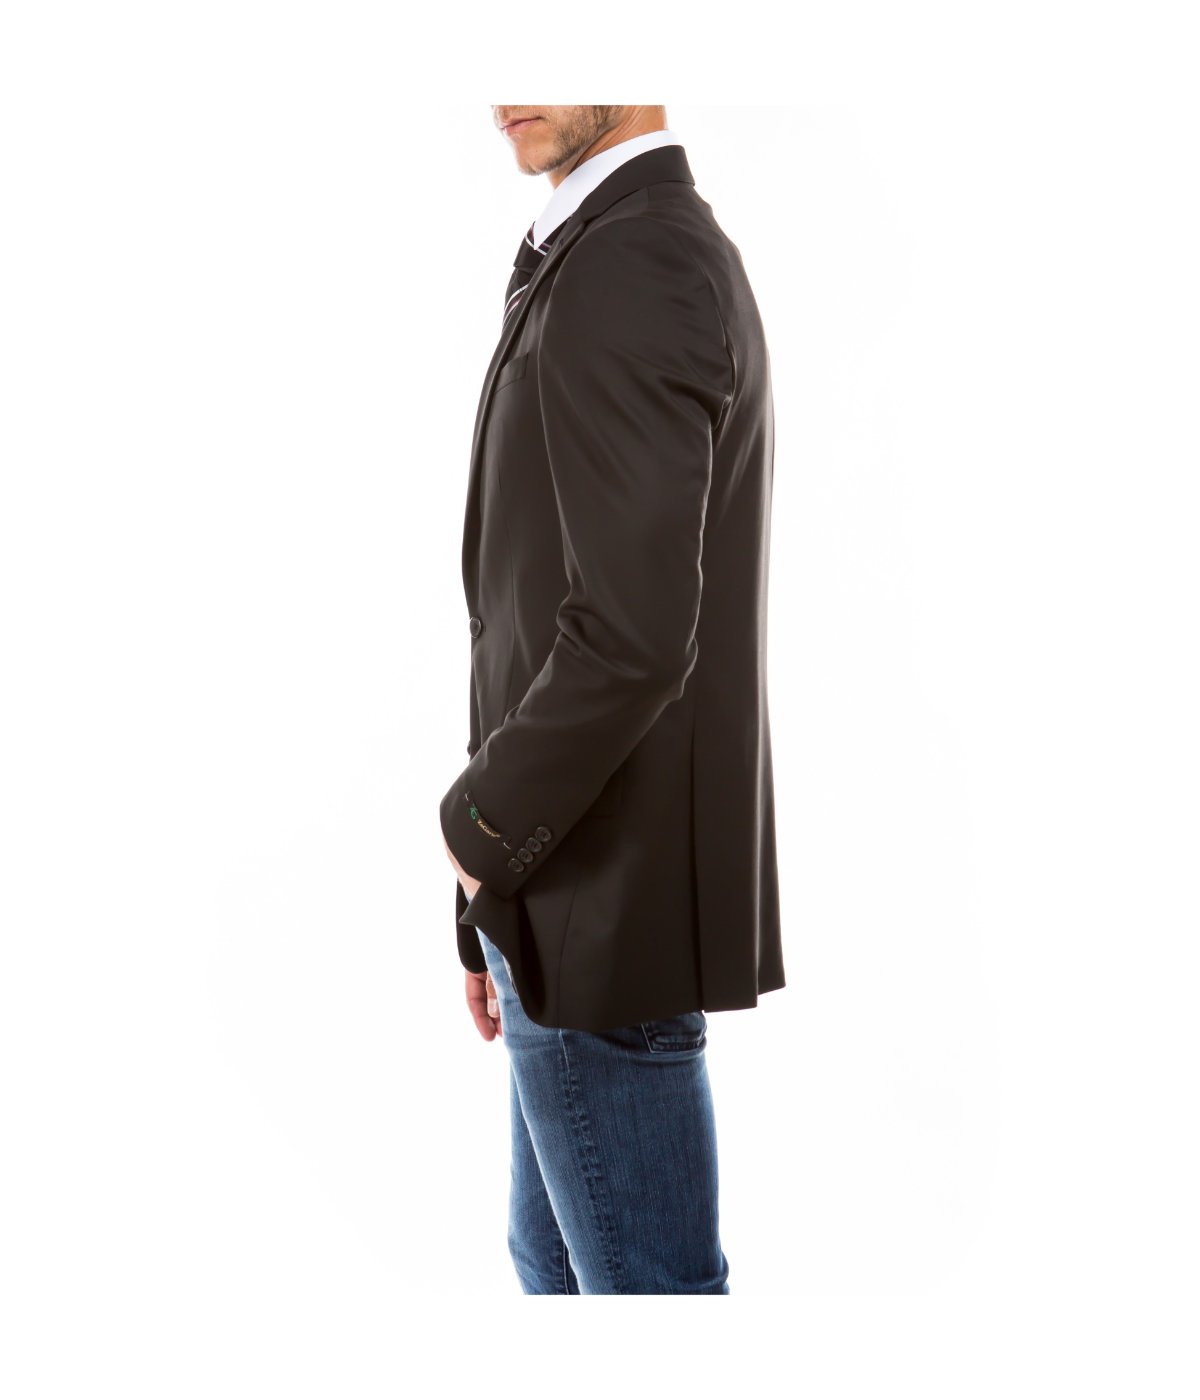 Solid Suit Separates Notch Collar Dinner Jacket Black